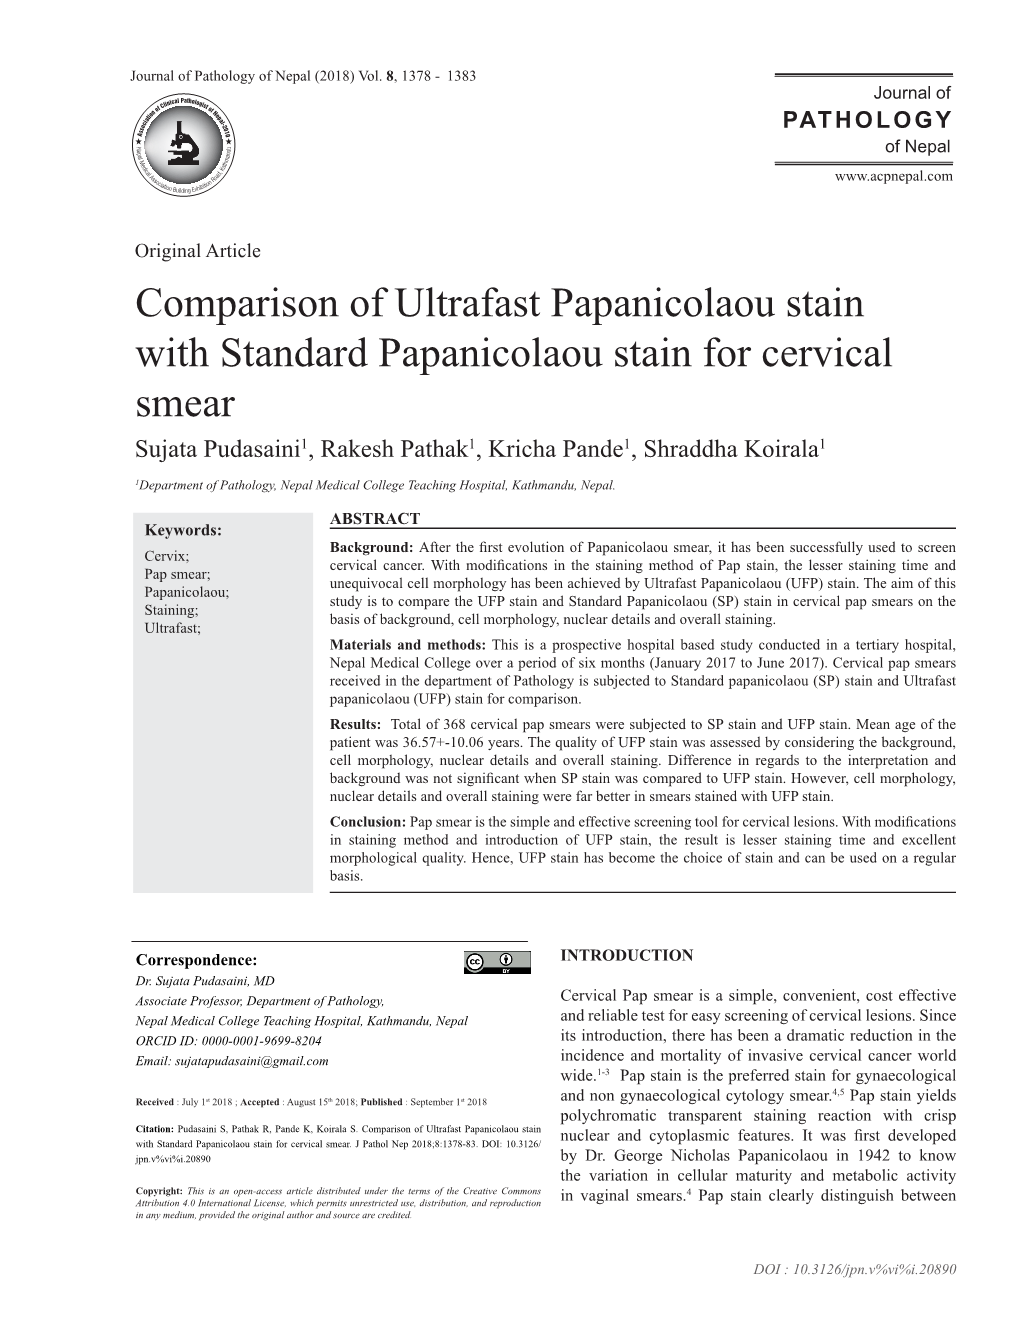 Comparison of Ultrafast Papanicolaou Stain with Standard Papanicolaou Stain for Cervical Smear Sujata Pudasaini1, Rakesh Pathak1, Kricha Pande1, Shraddha Koirala1